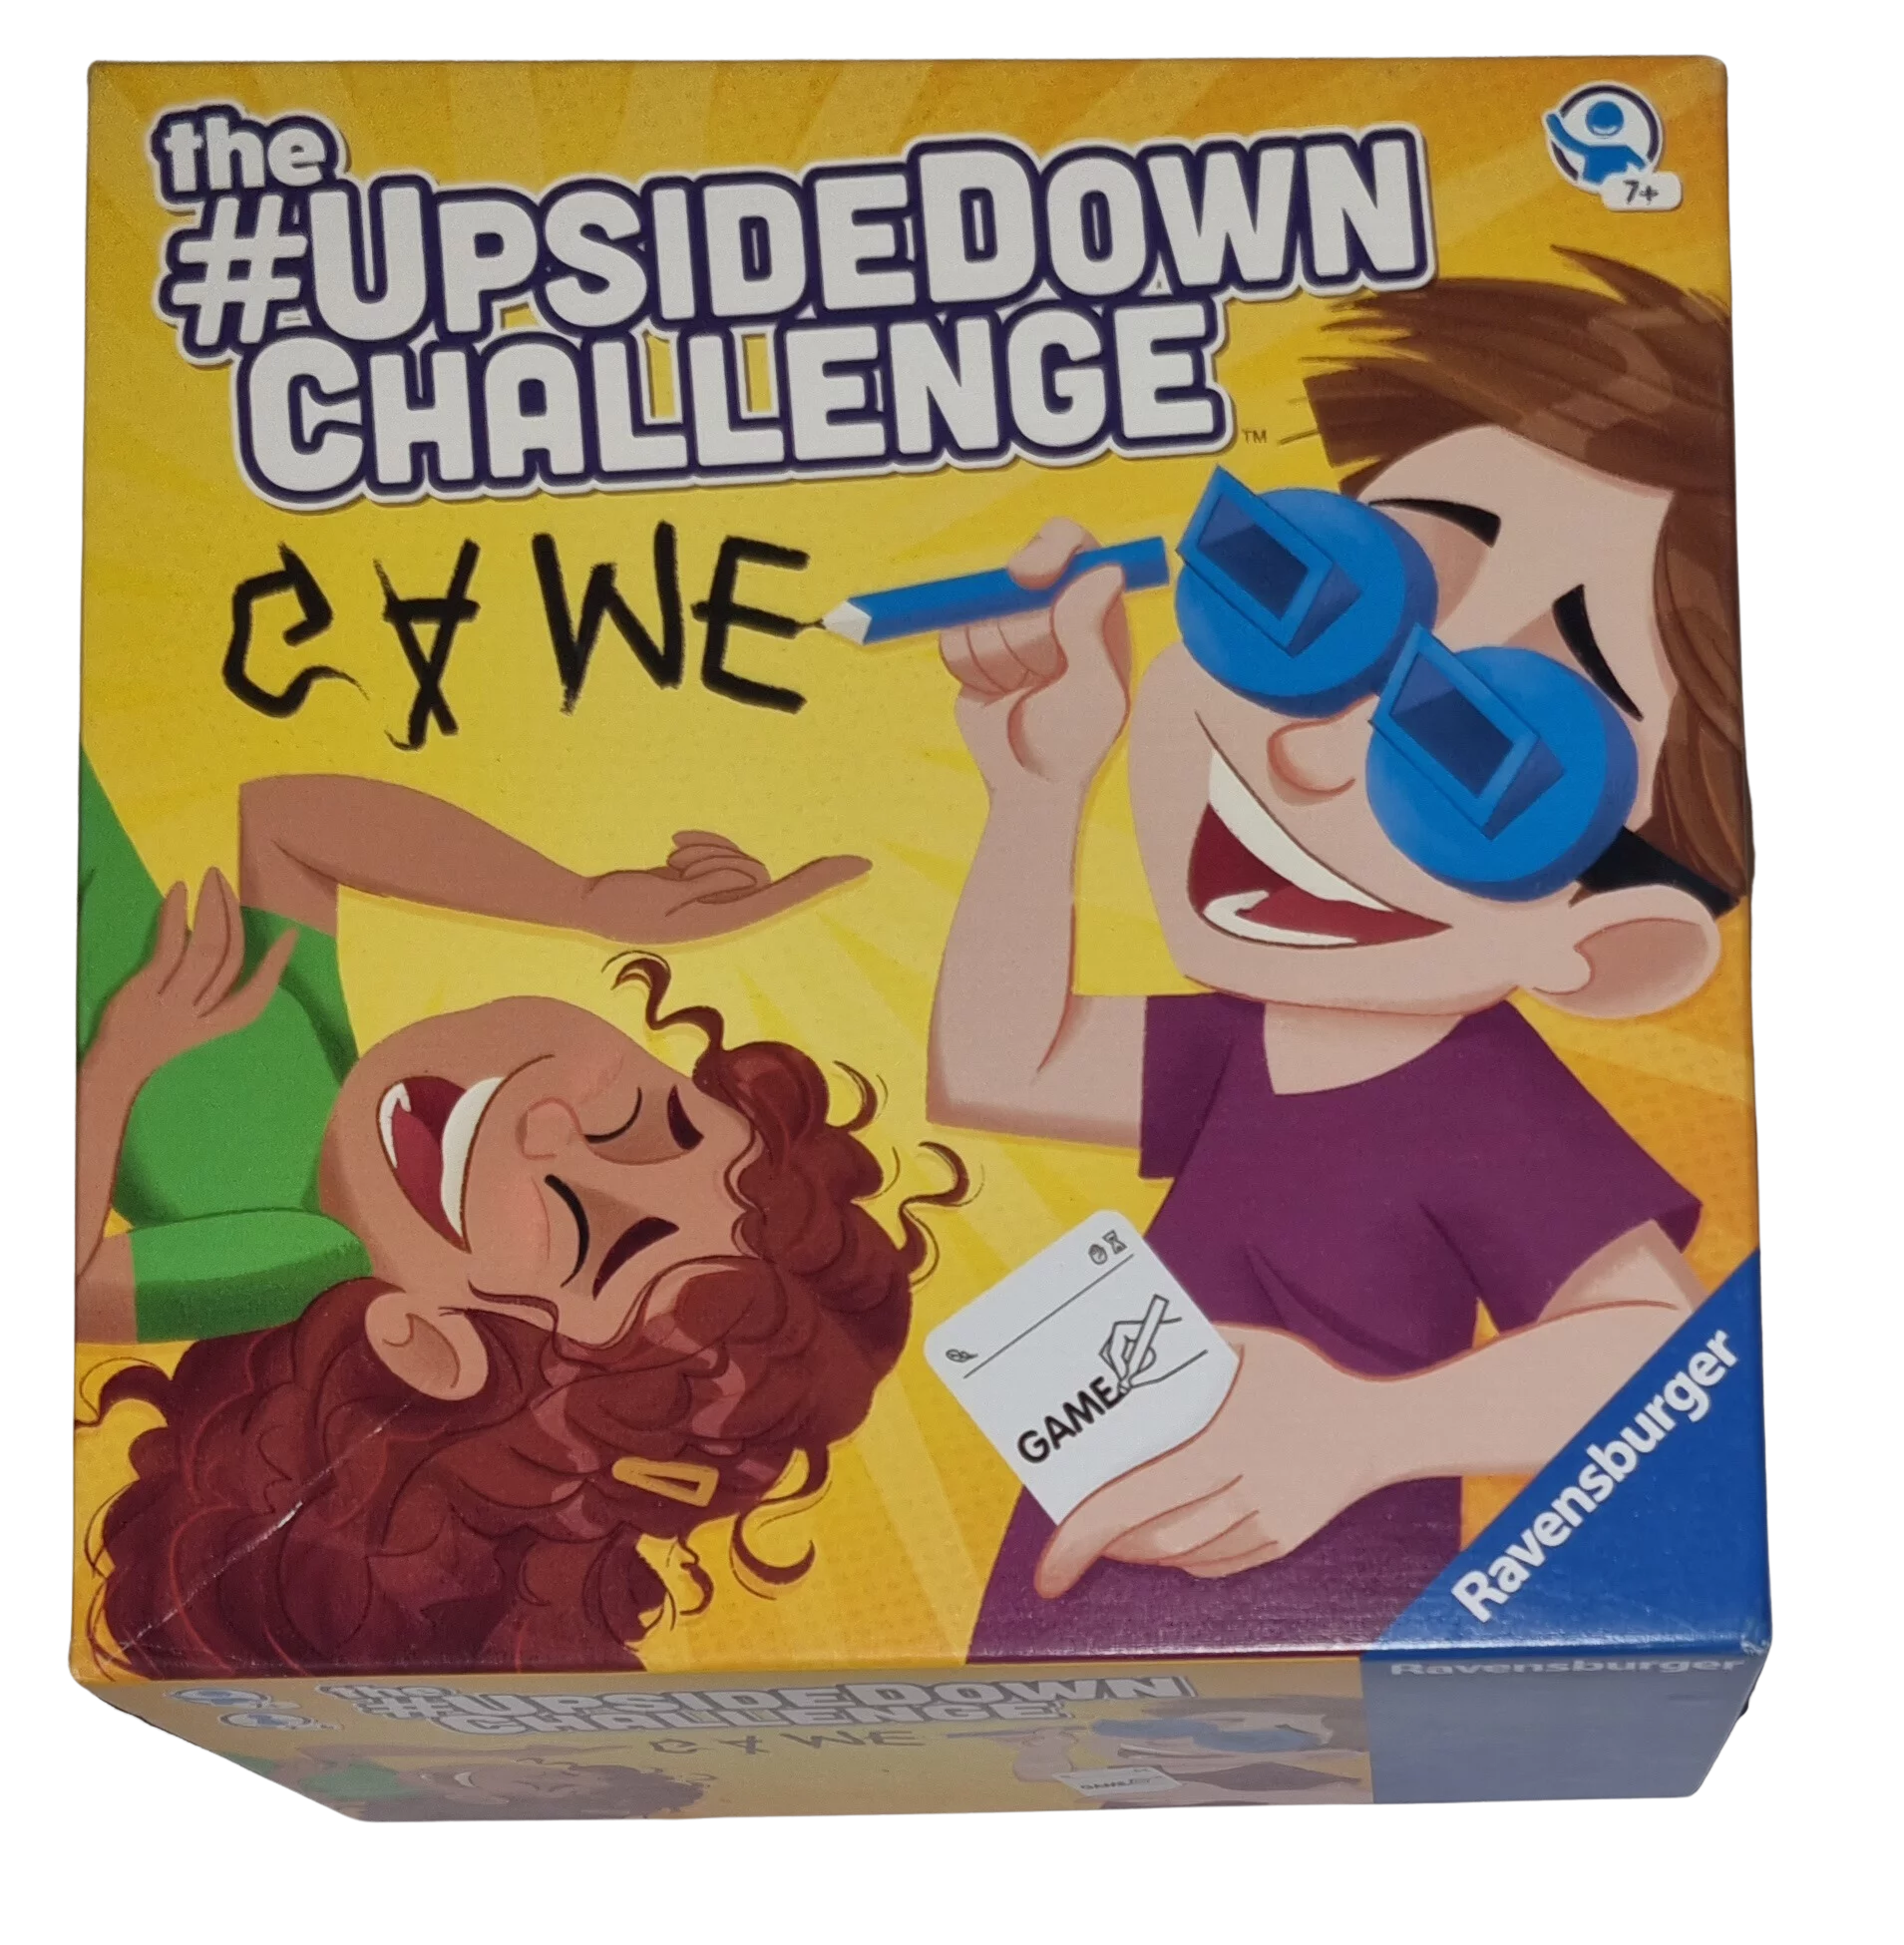 Ravensburger the #upsidedown challenge 206728